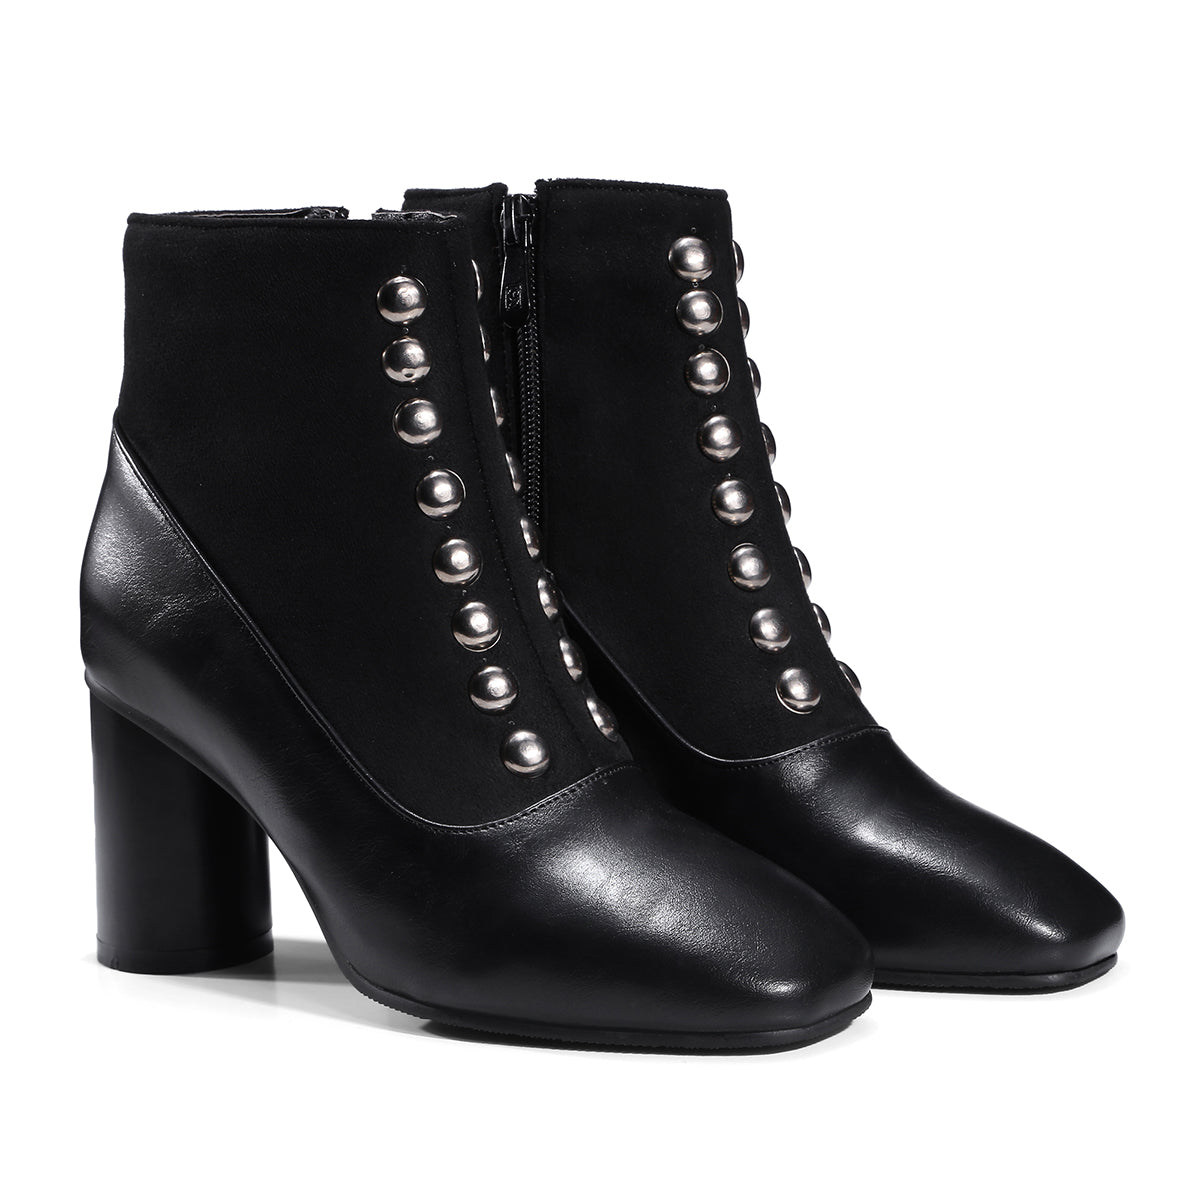 Bigsizeheels Square head rivet coloured ankle boots - Black freeshipping - bigsizeheel®-size5-size15 -All Plus Sizes Available!